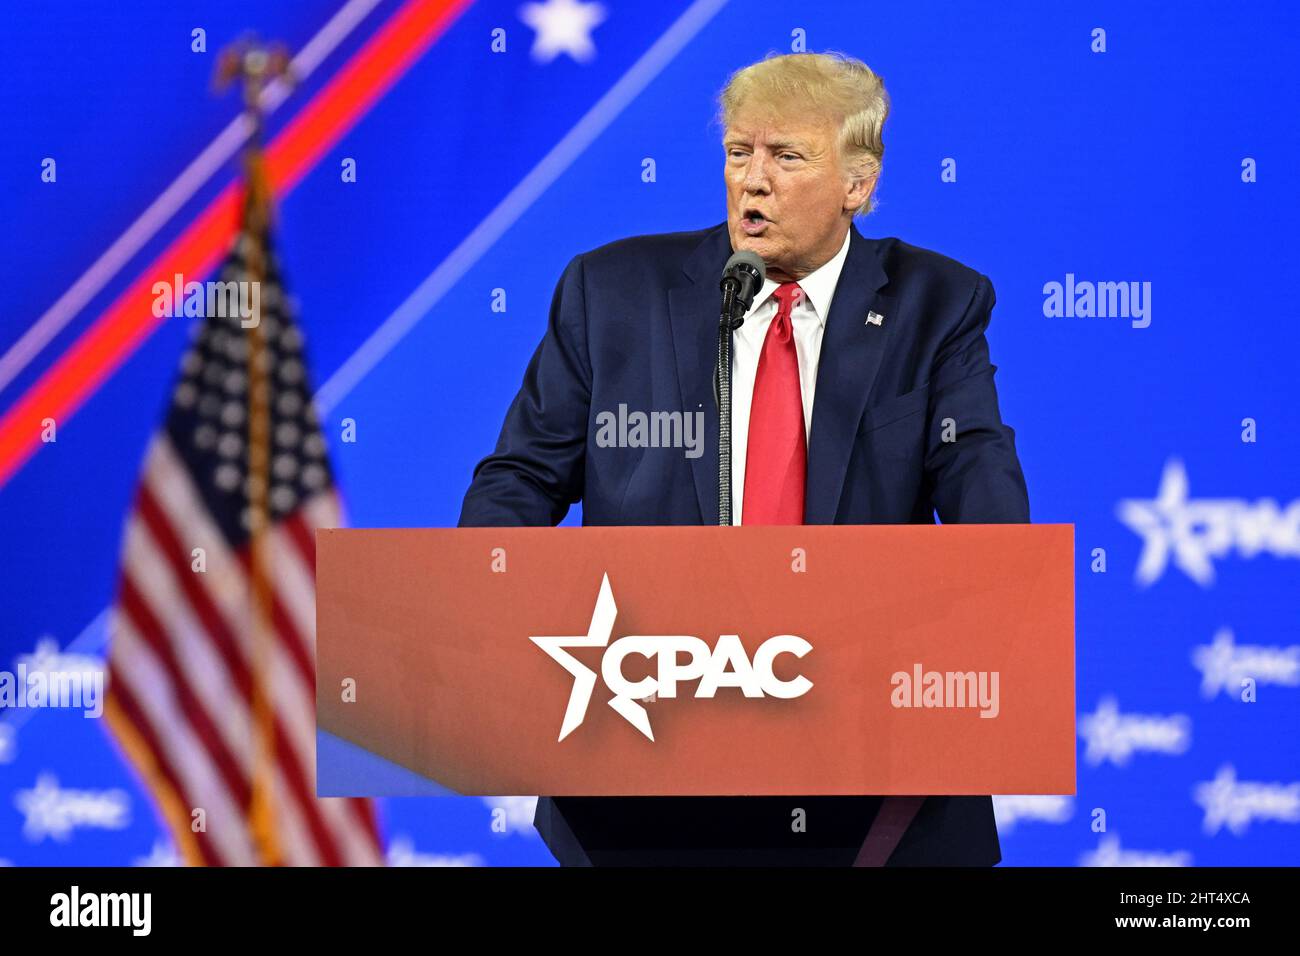 Präsident Donald Trump spricht am Samstag, den 26. Februar 2022, auf der Conservative Political Action Conference (CPAC22) in Orlando, Florida. Foto von Joe Marino/UPI Credit: UPI/Alamy Live News Stockfoto